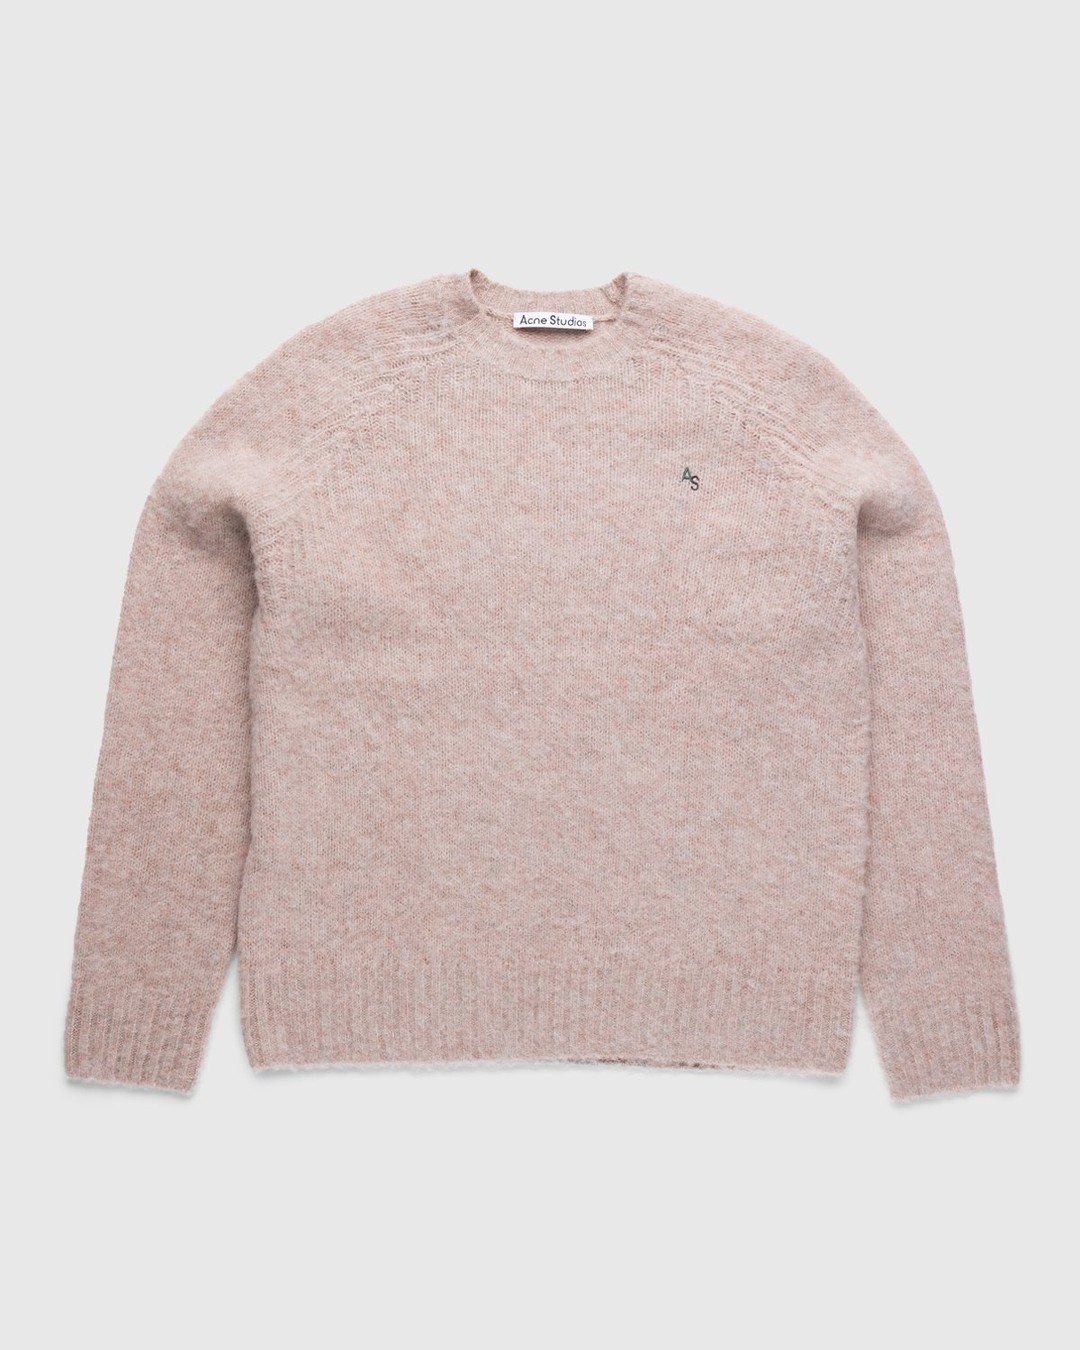 Acne Studios – Knit Sweater Pastel Pink - Crewnecks - Pink - Image 1